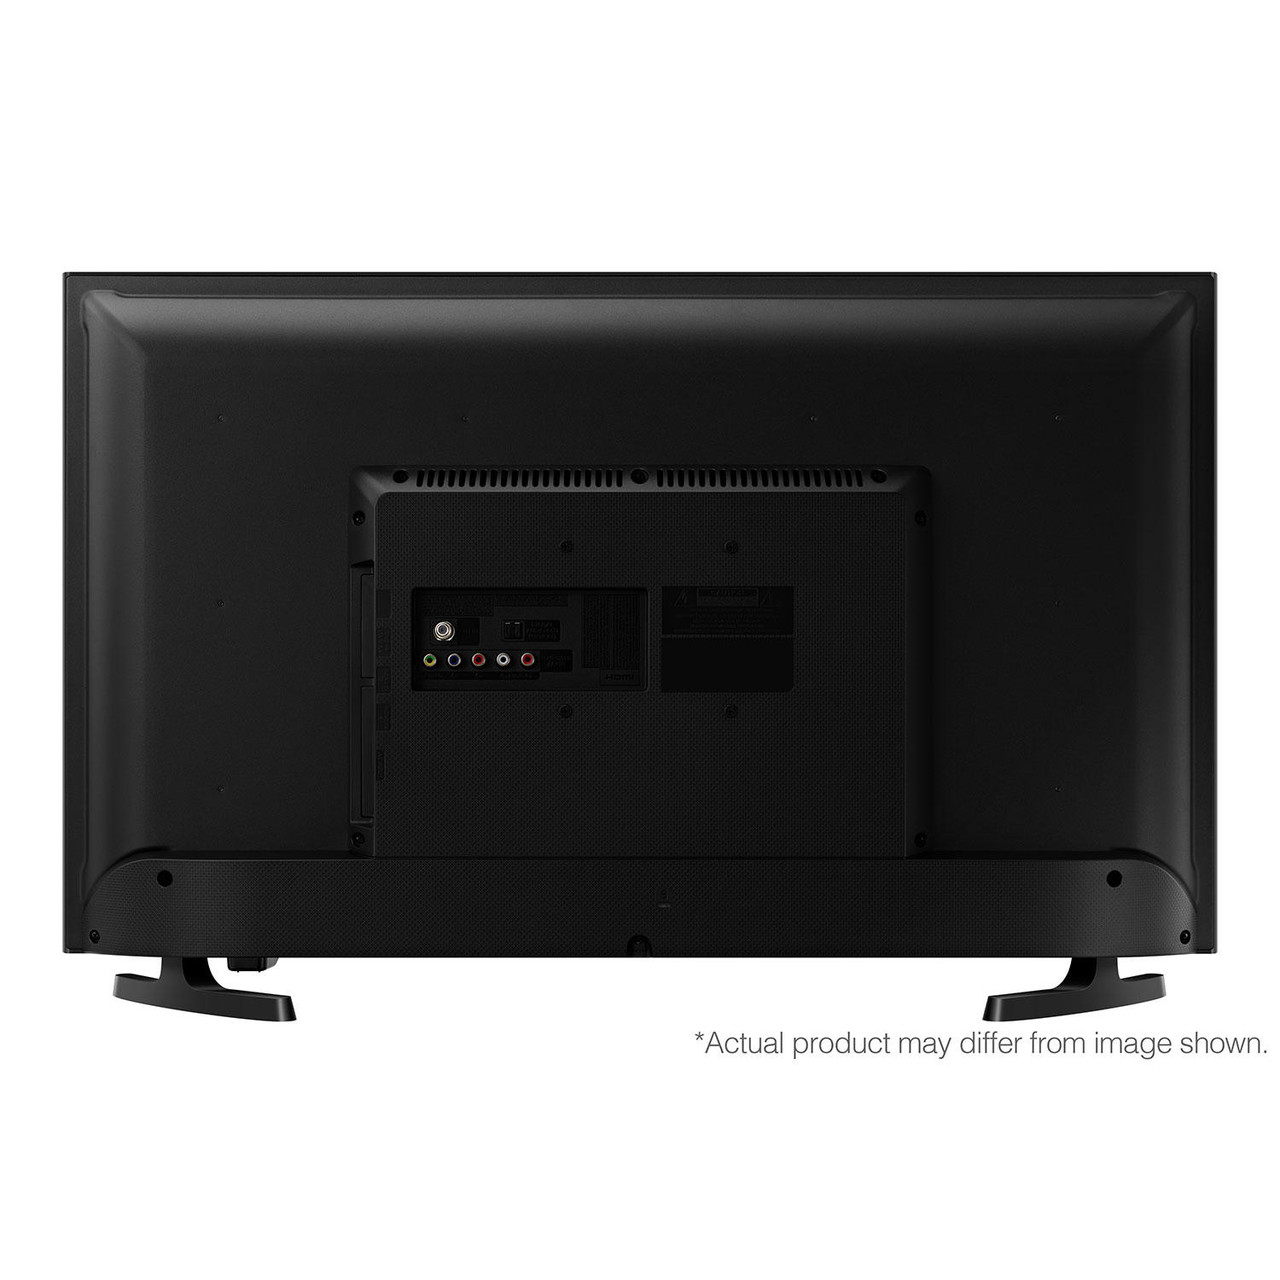 SAMSUNG 32" Class (1080p) Full HD Smart LED TV - UN32N5300AFXZA - *Pre-Order